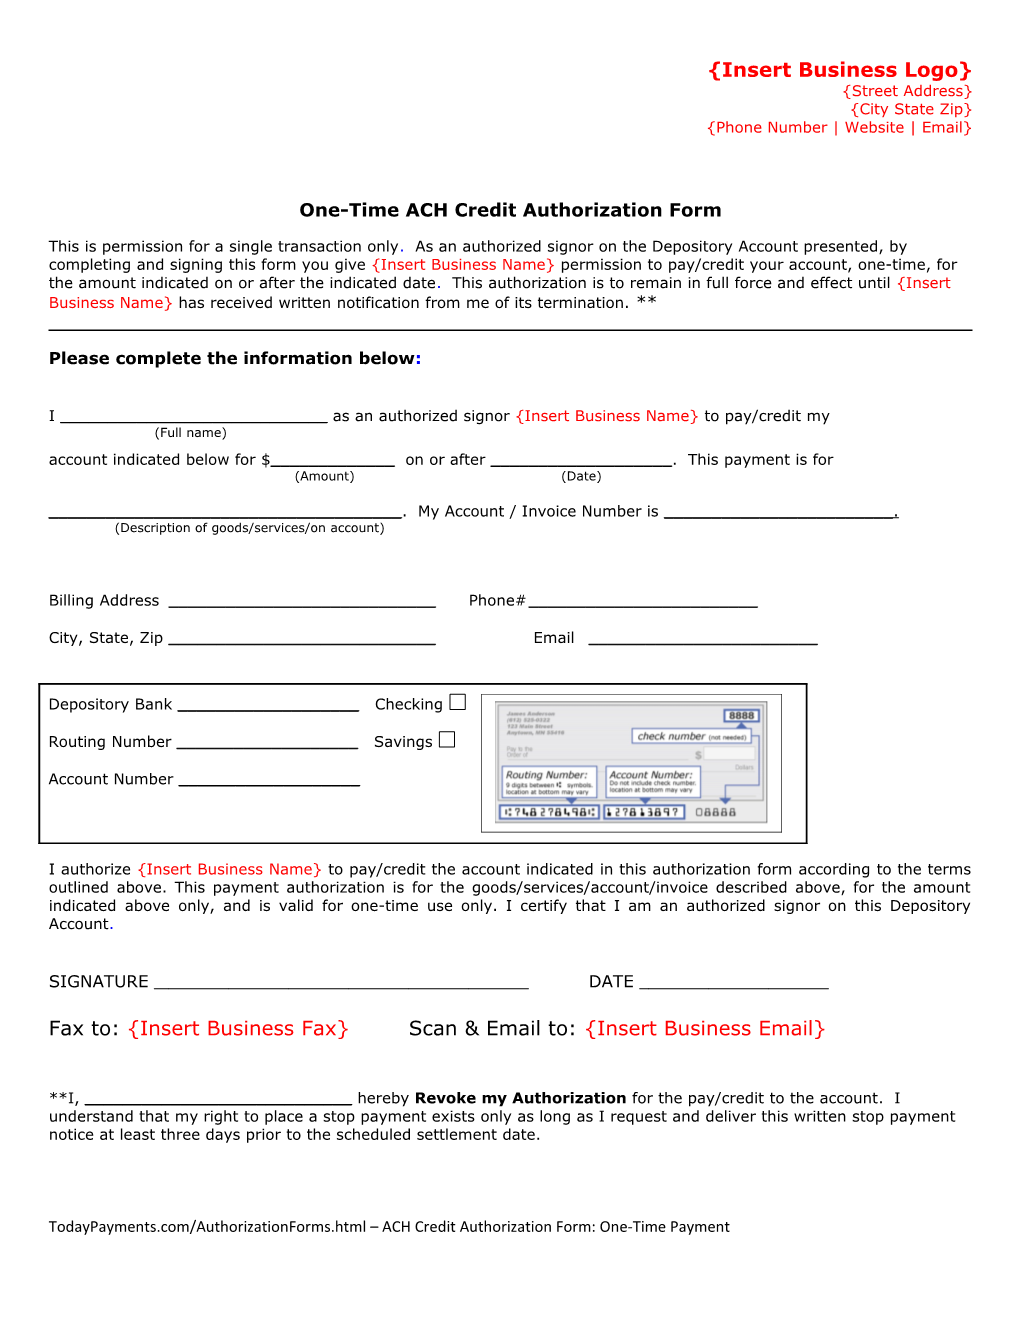 ACH Credit Authorization Form